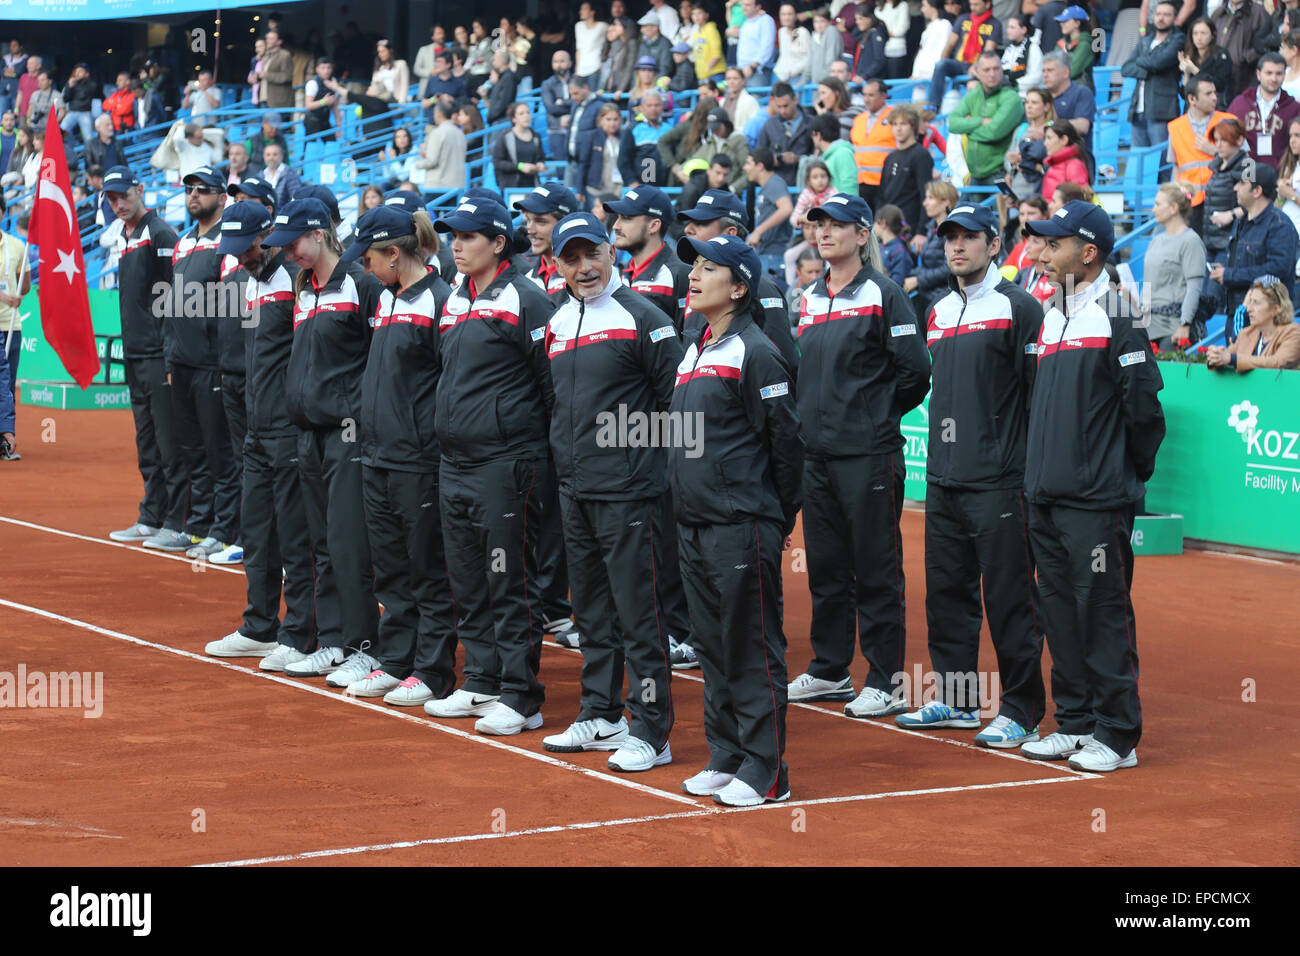 ISTANBUL, TURKEY - MAY 03, 2015: Line umpires in award ceremony of TEB BNP Paribas Istanbul Open 2015 Stock Photo